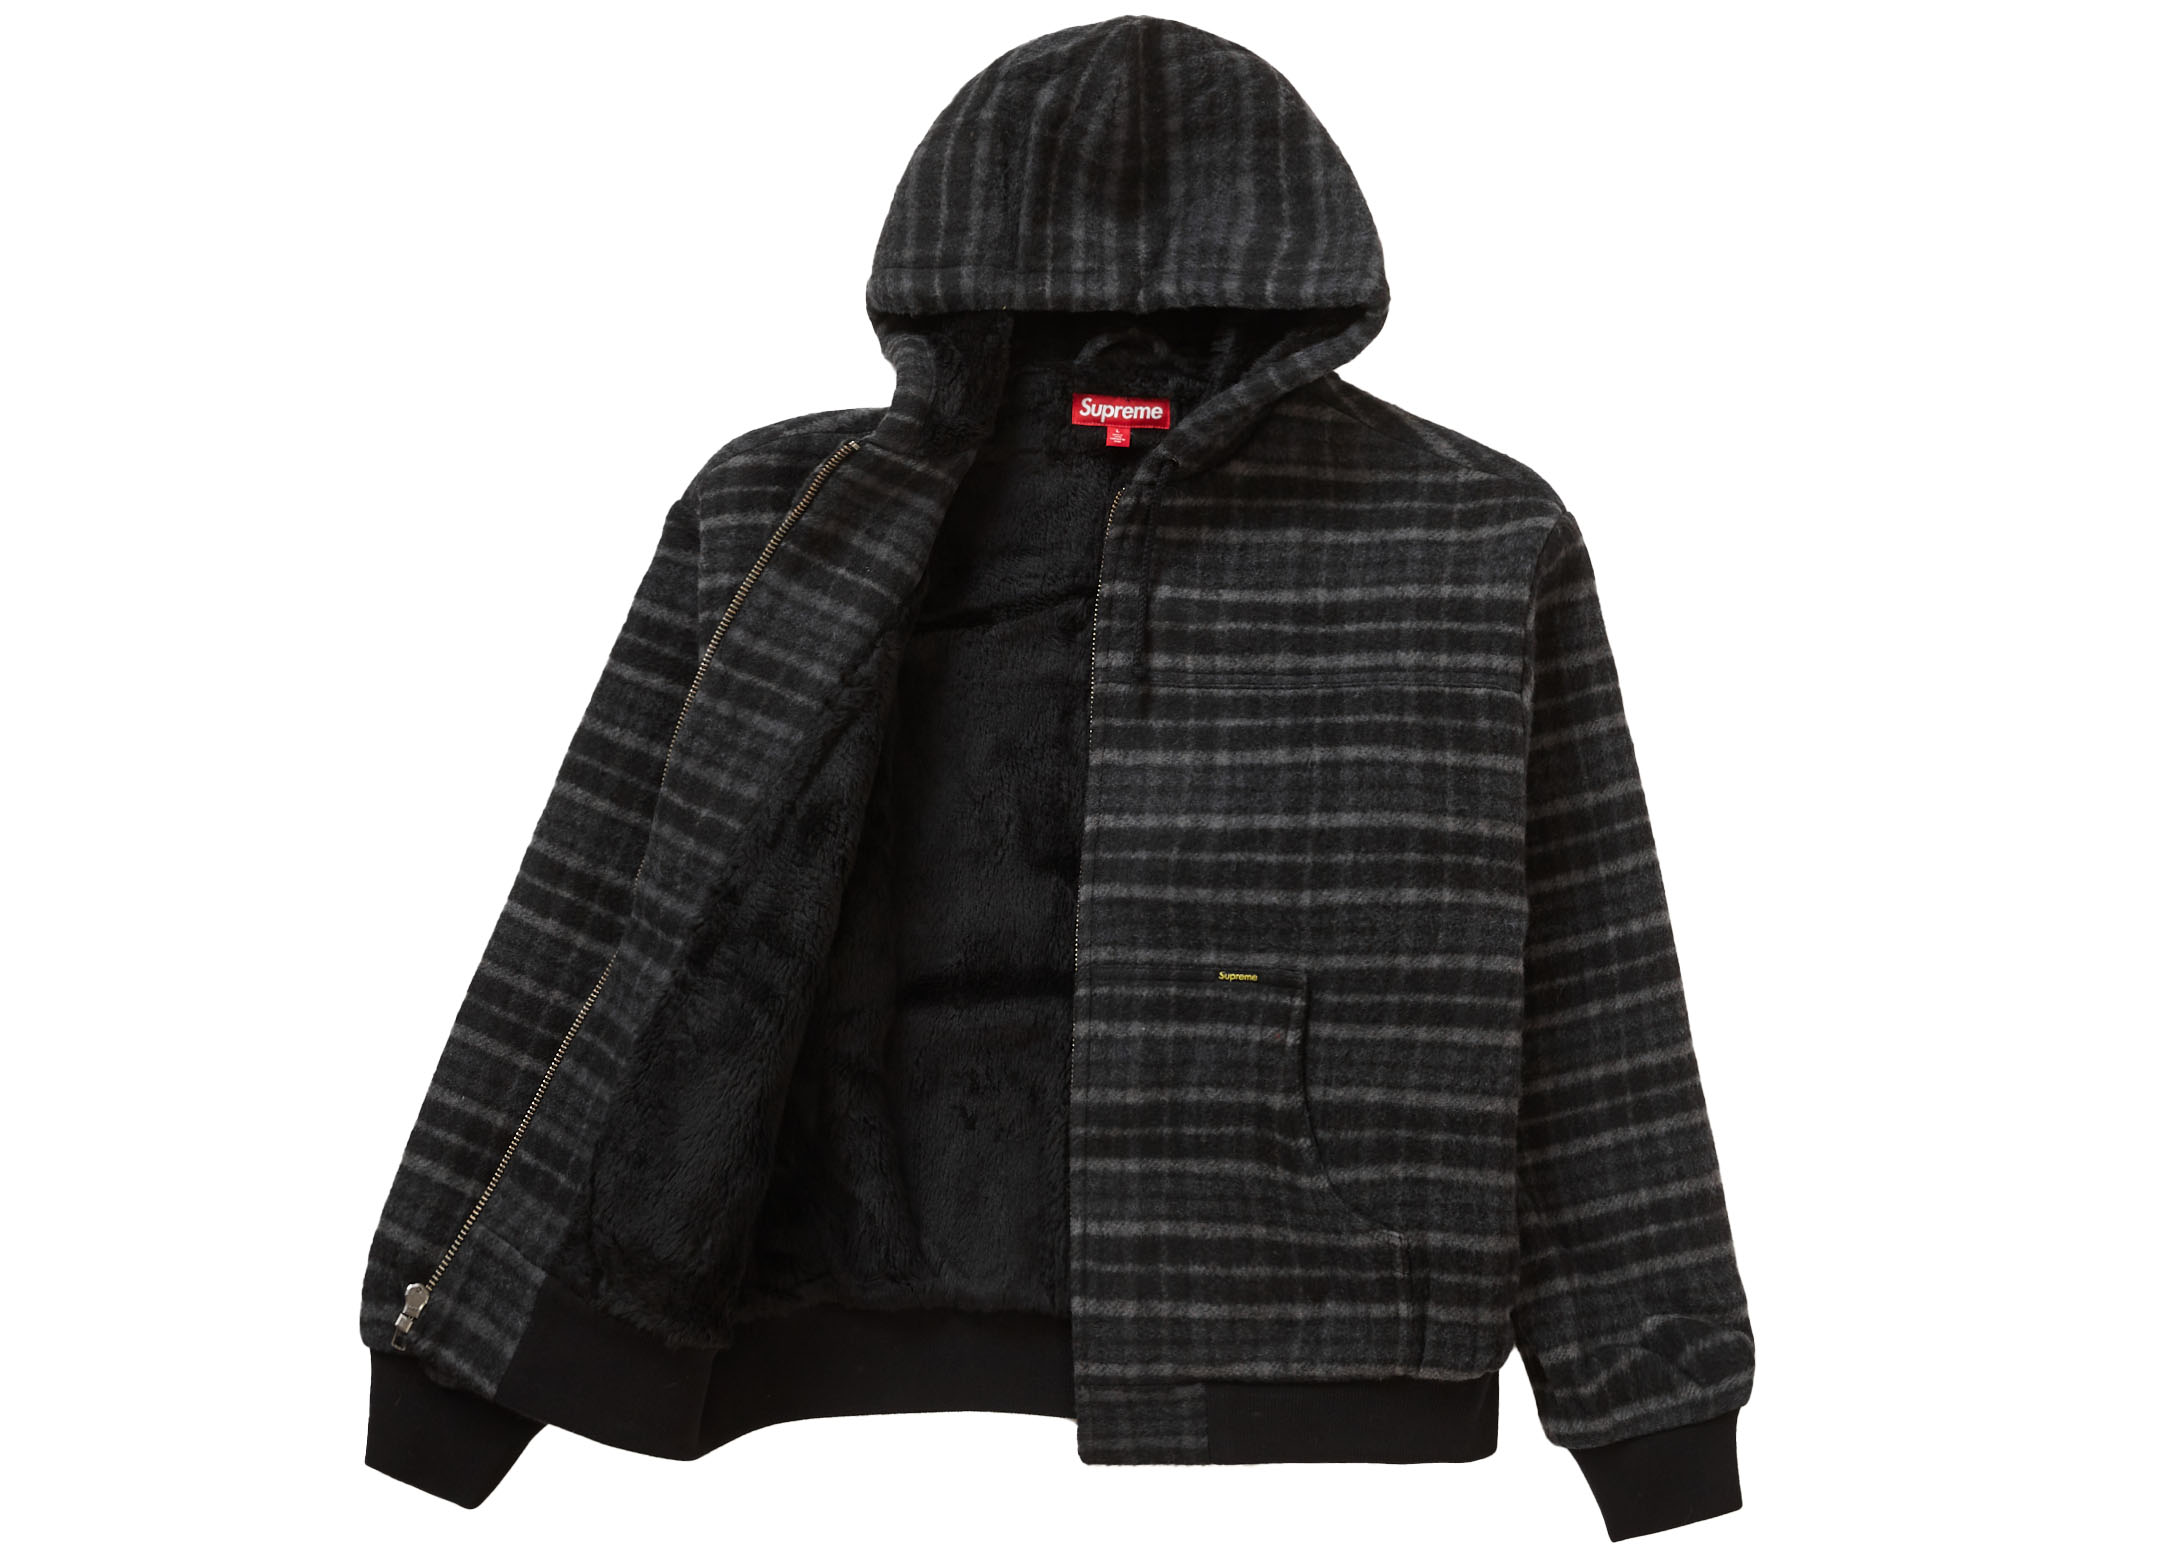 Supreme Plaid Wool Hooded Work Jacket  M袖丈62